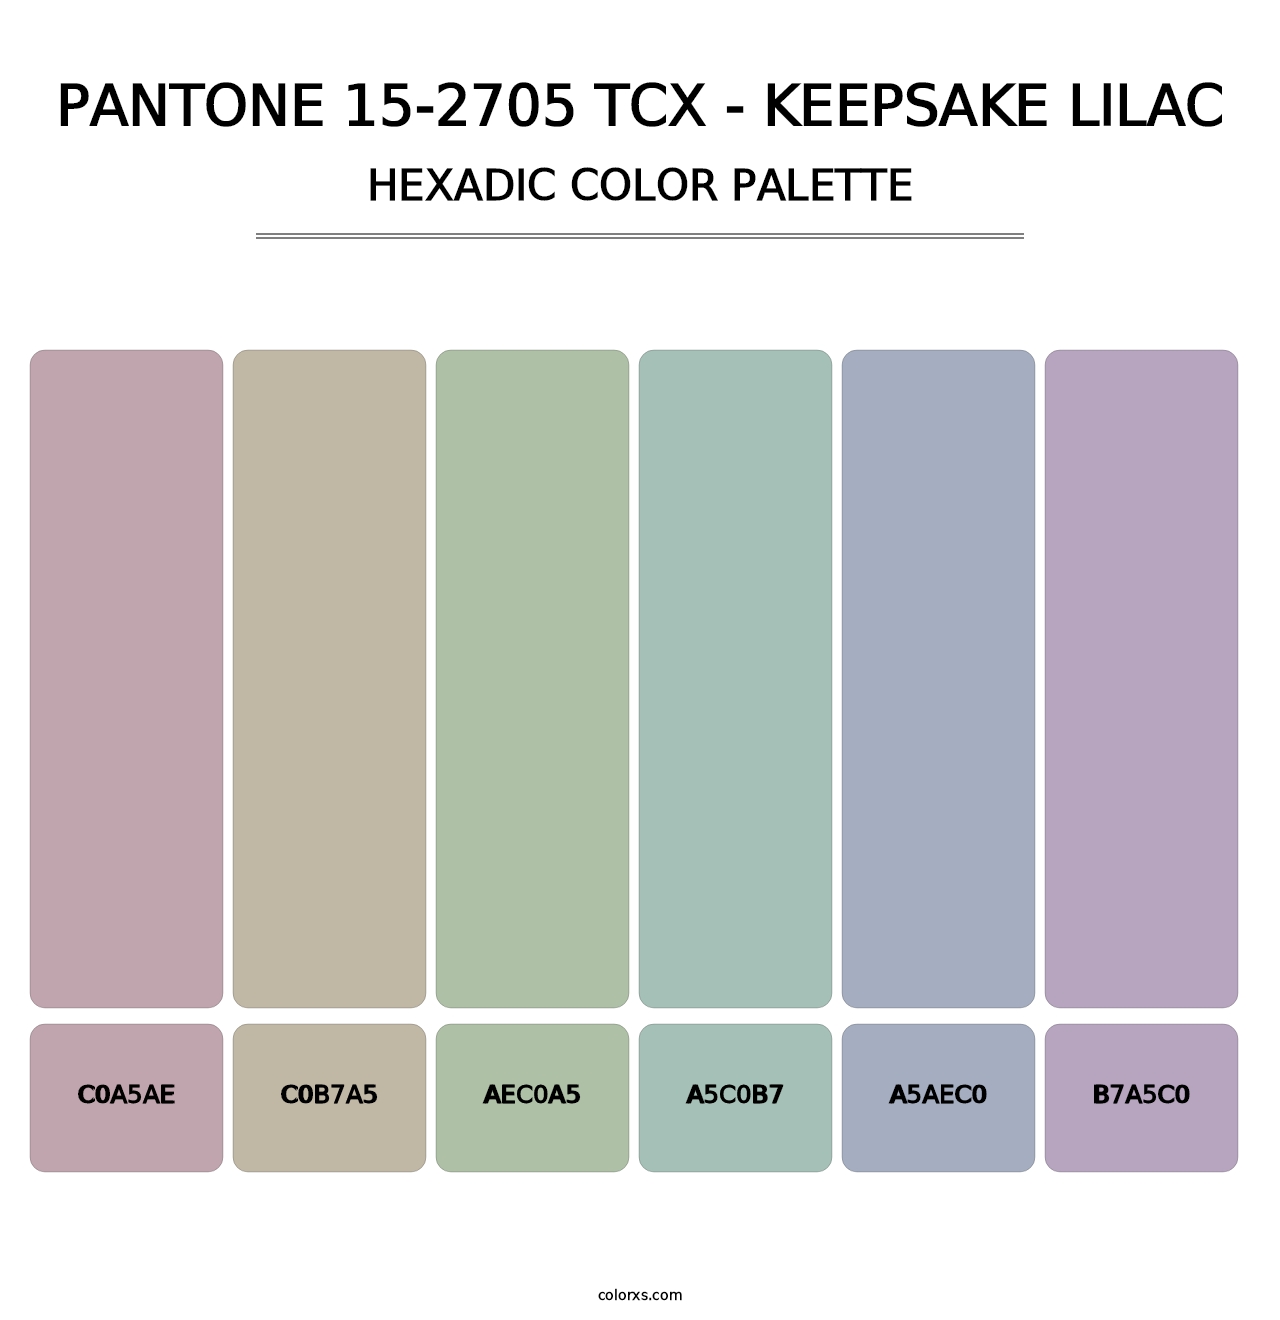 PANTONE 15-2705 TCX - Keepsake Lilac - Hexadic Color Palette